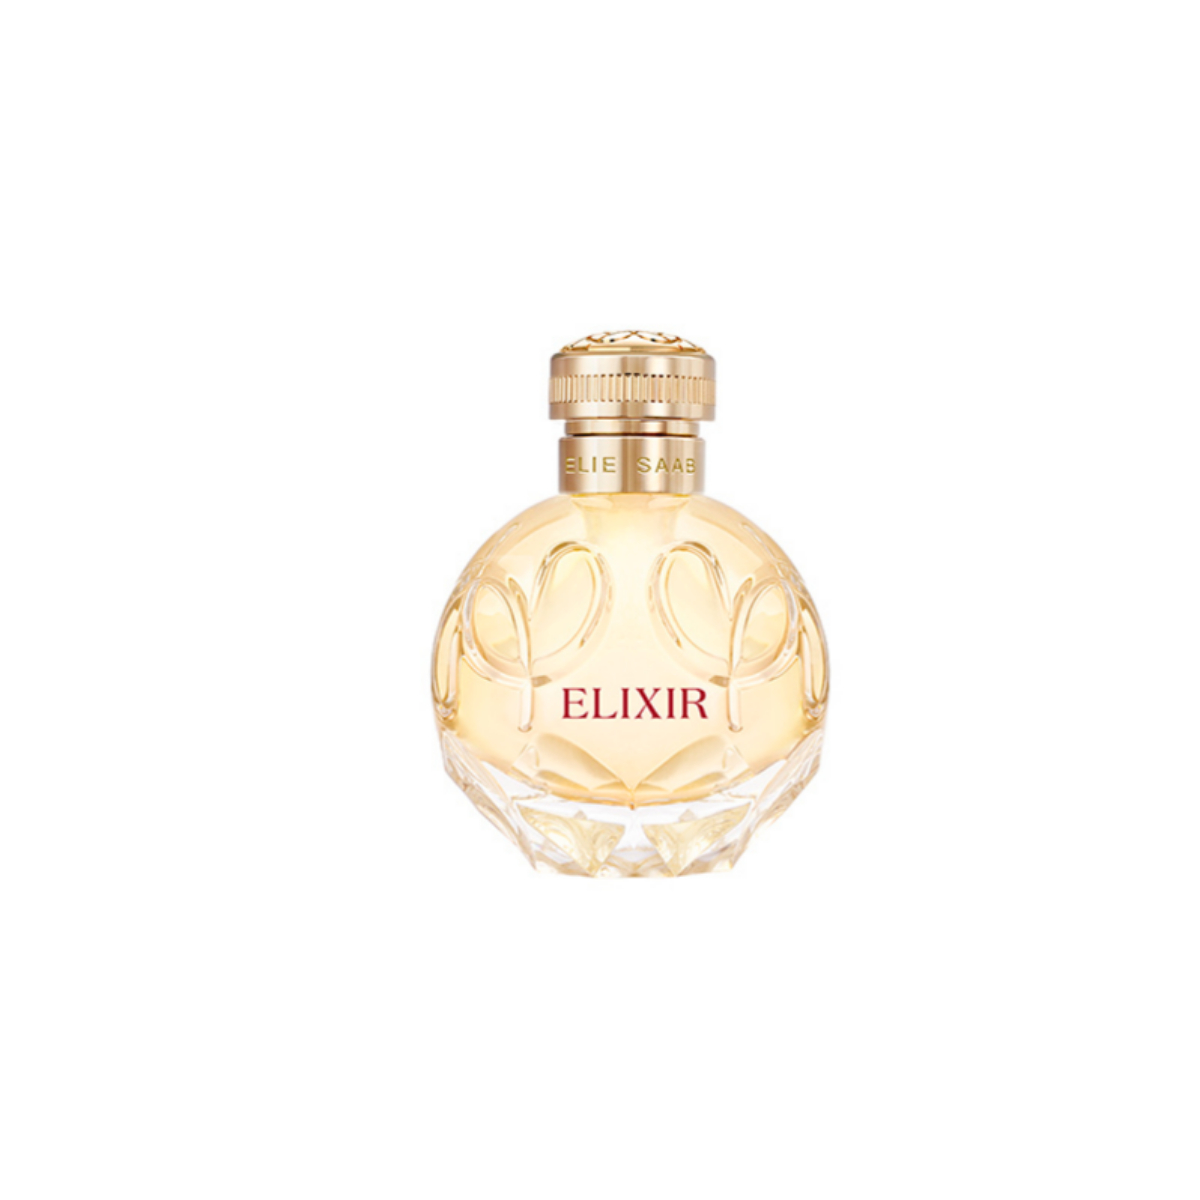 Perfume Elixir, de Elie Saab.